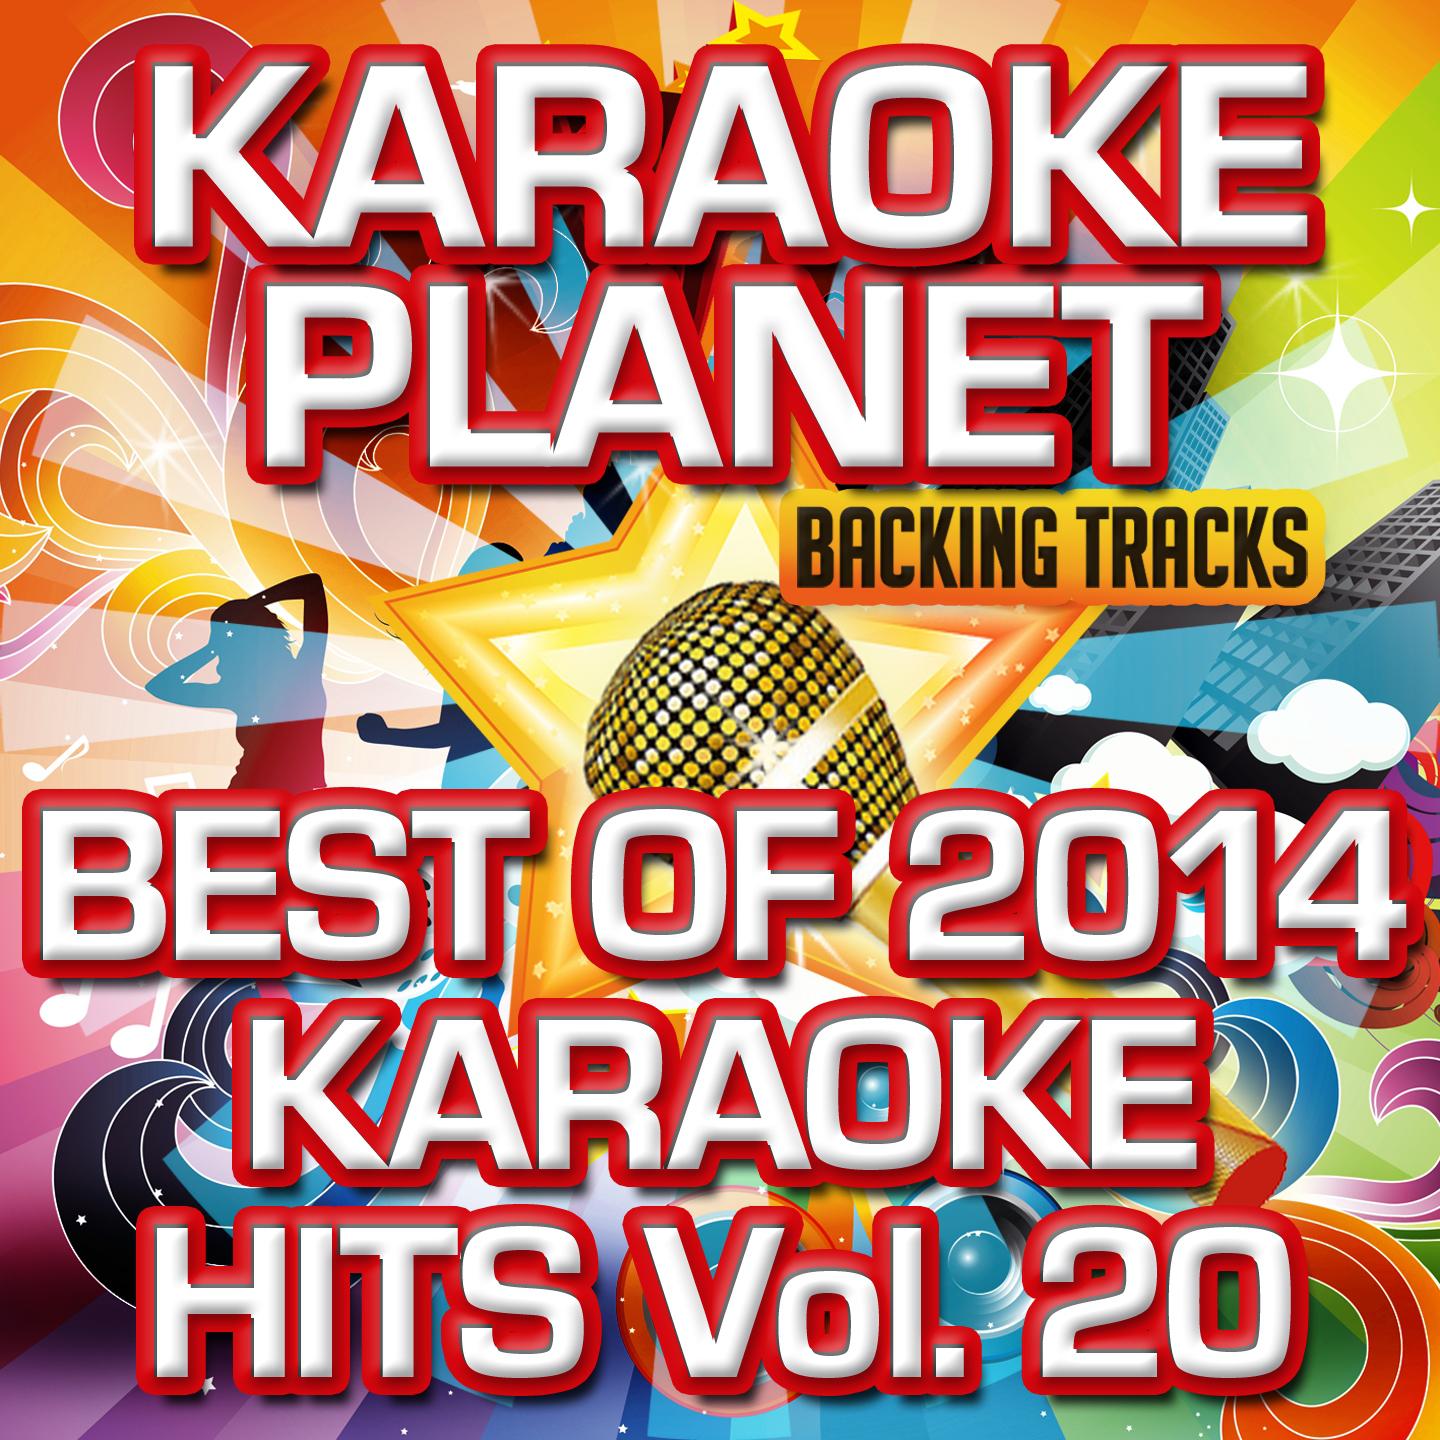 Best of 2014 Karaoke Hits, Vol. 20